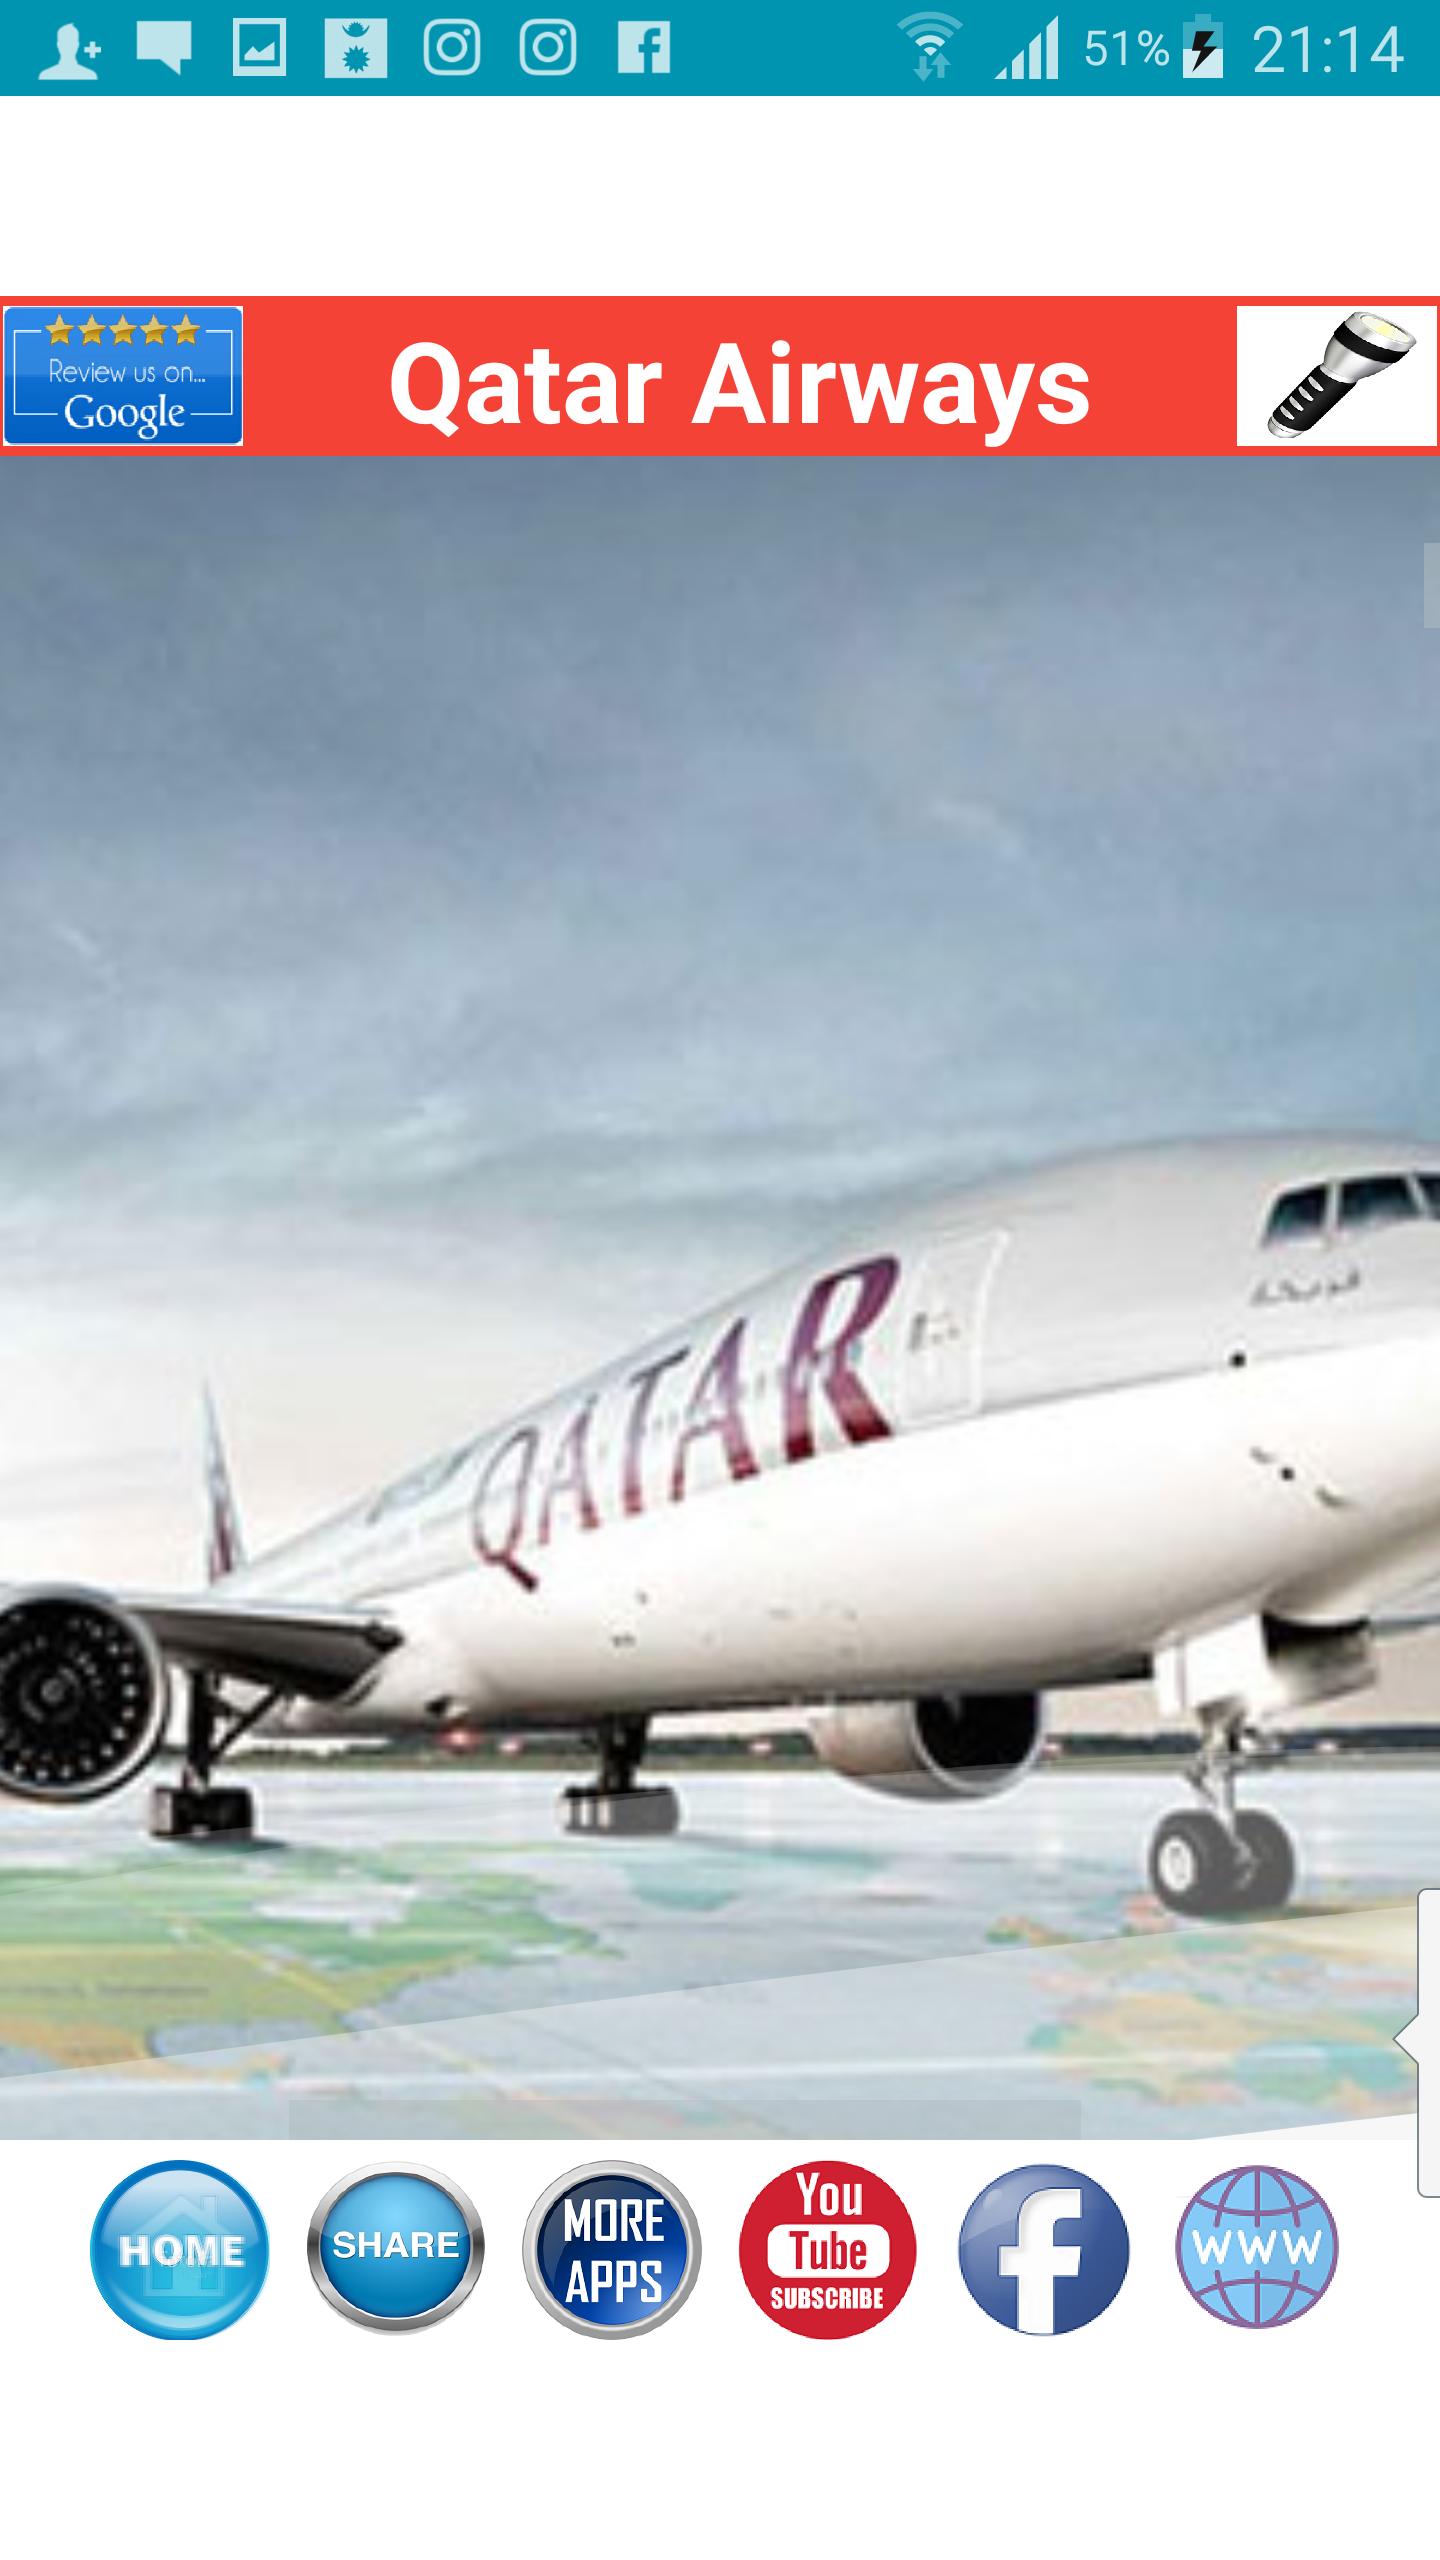 Qatar Airways Cheap Best Airlines Book Flight For Android Apk Download - roblox qatar airways roblox free download